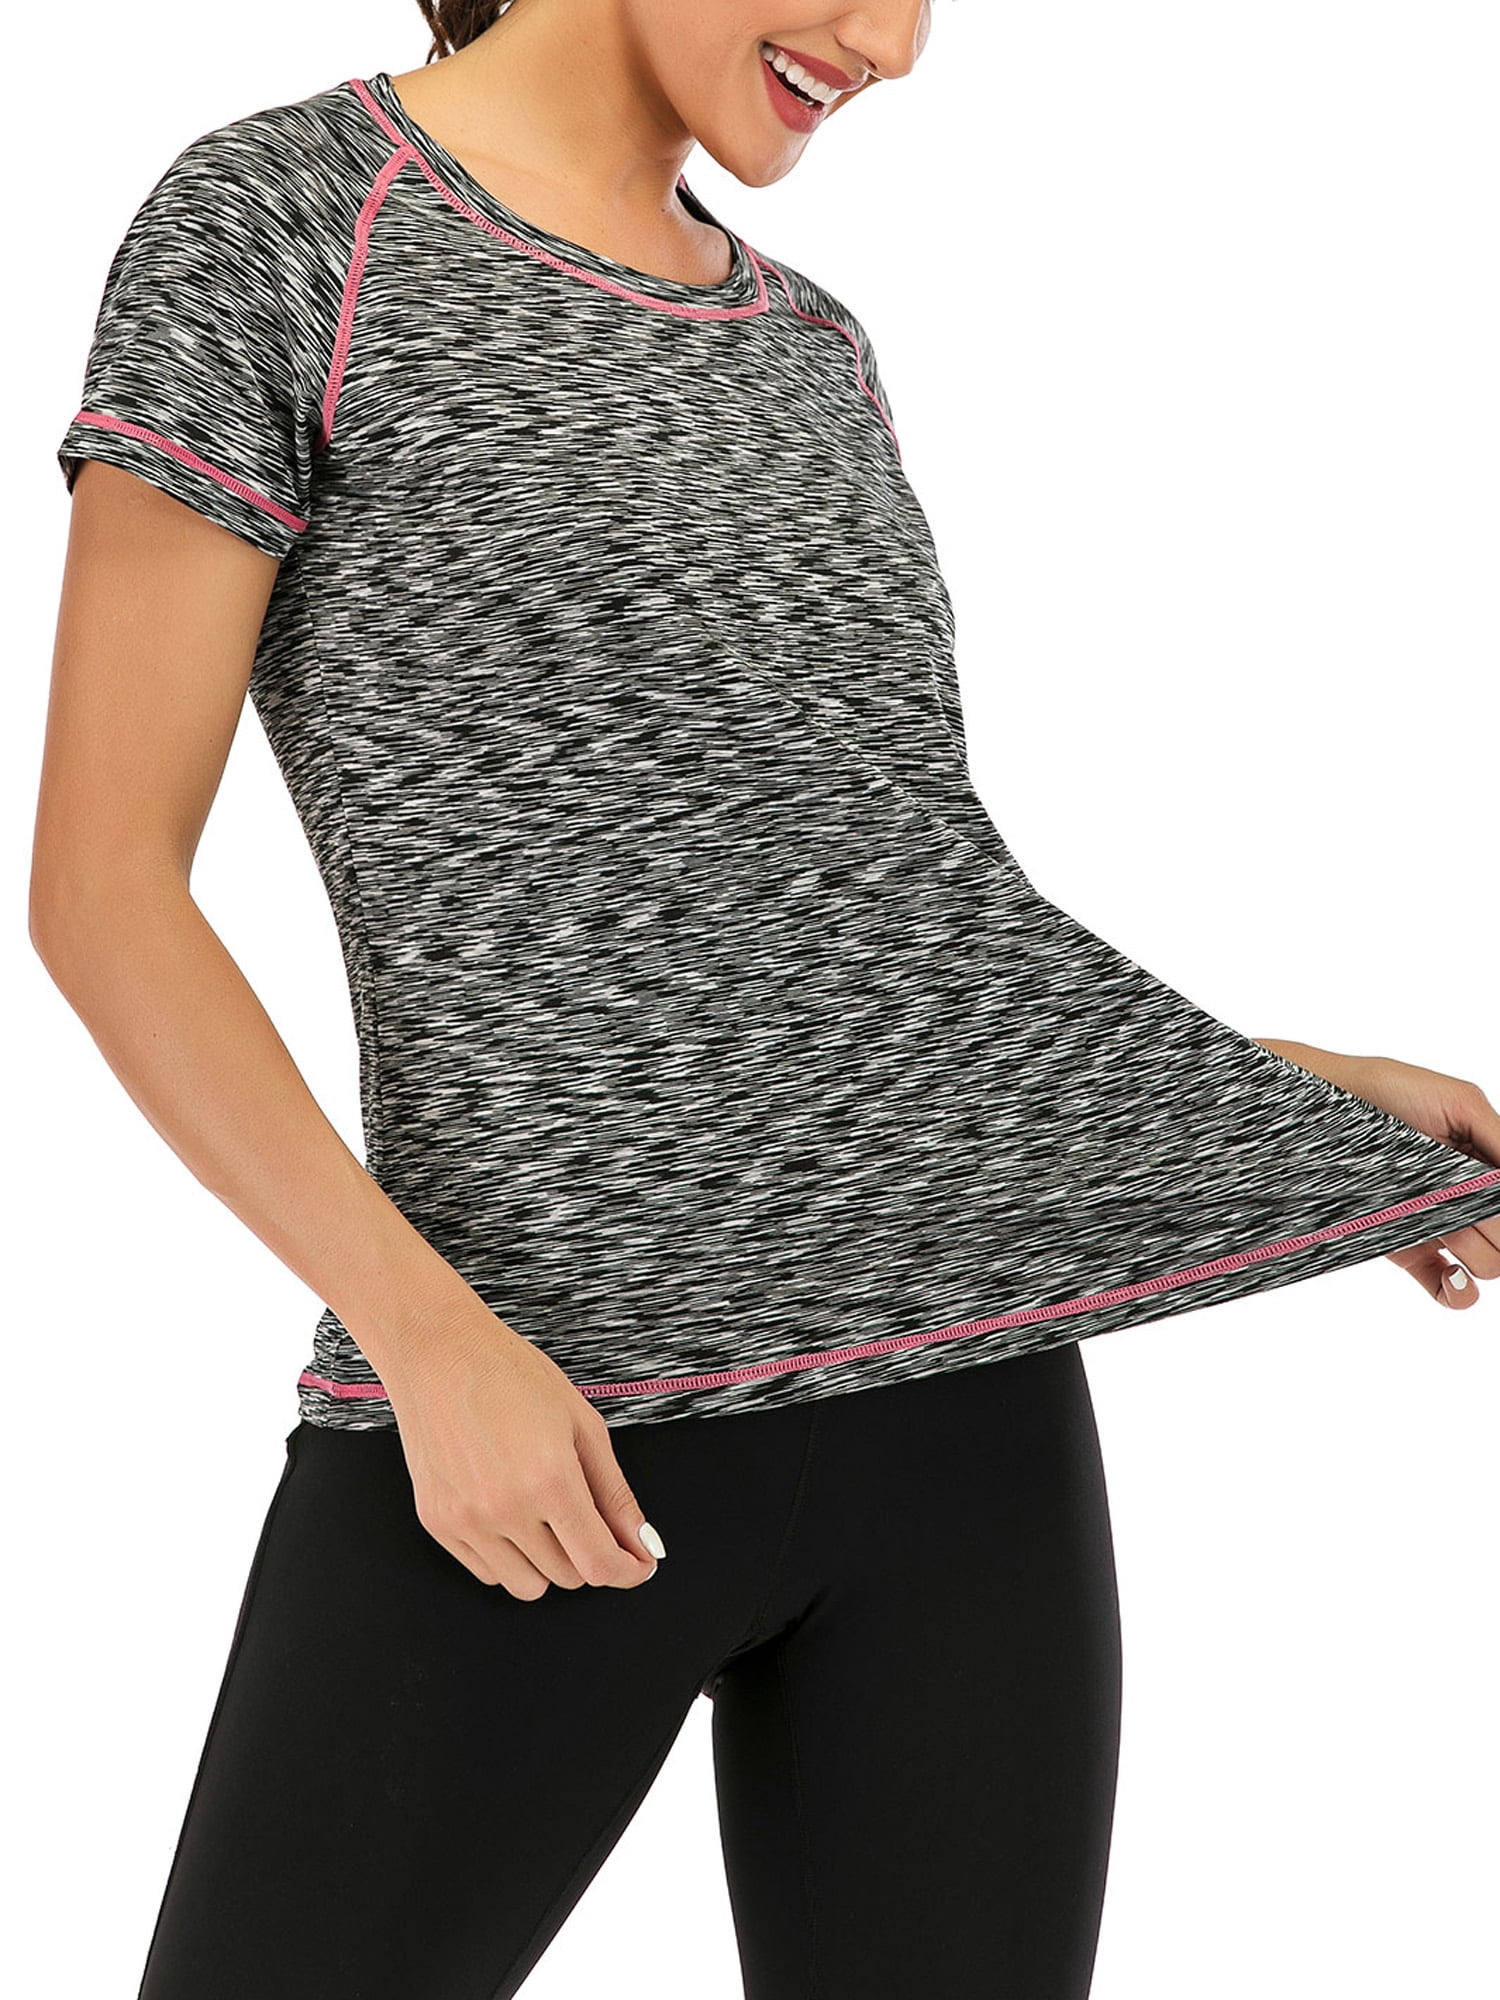 yoga short sleeve shirts